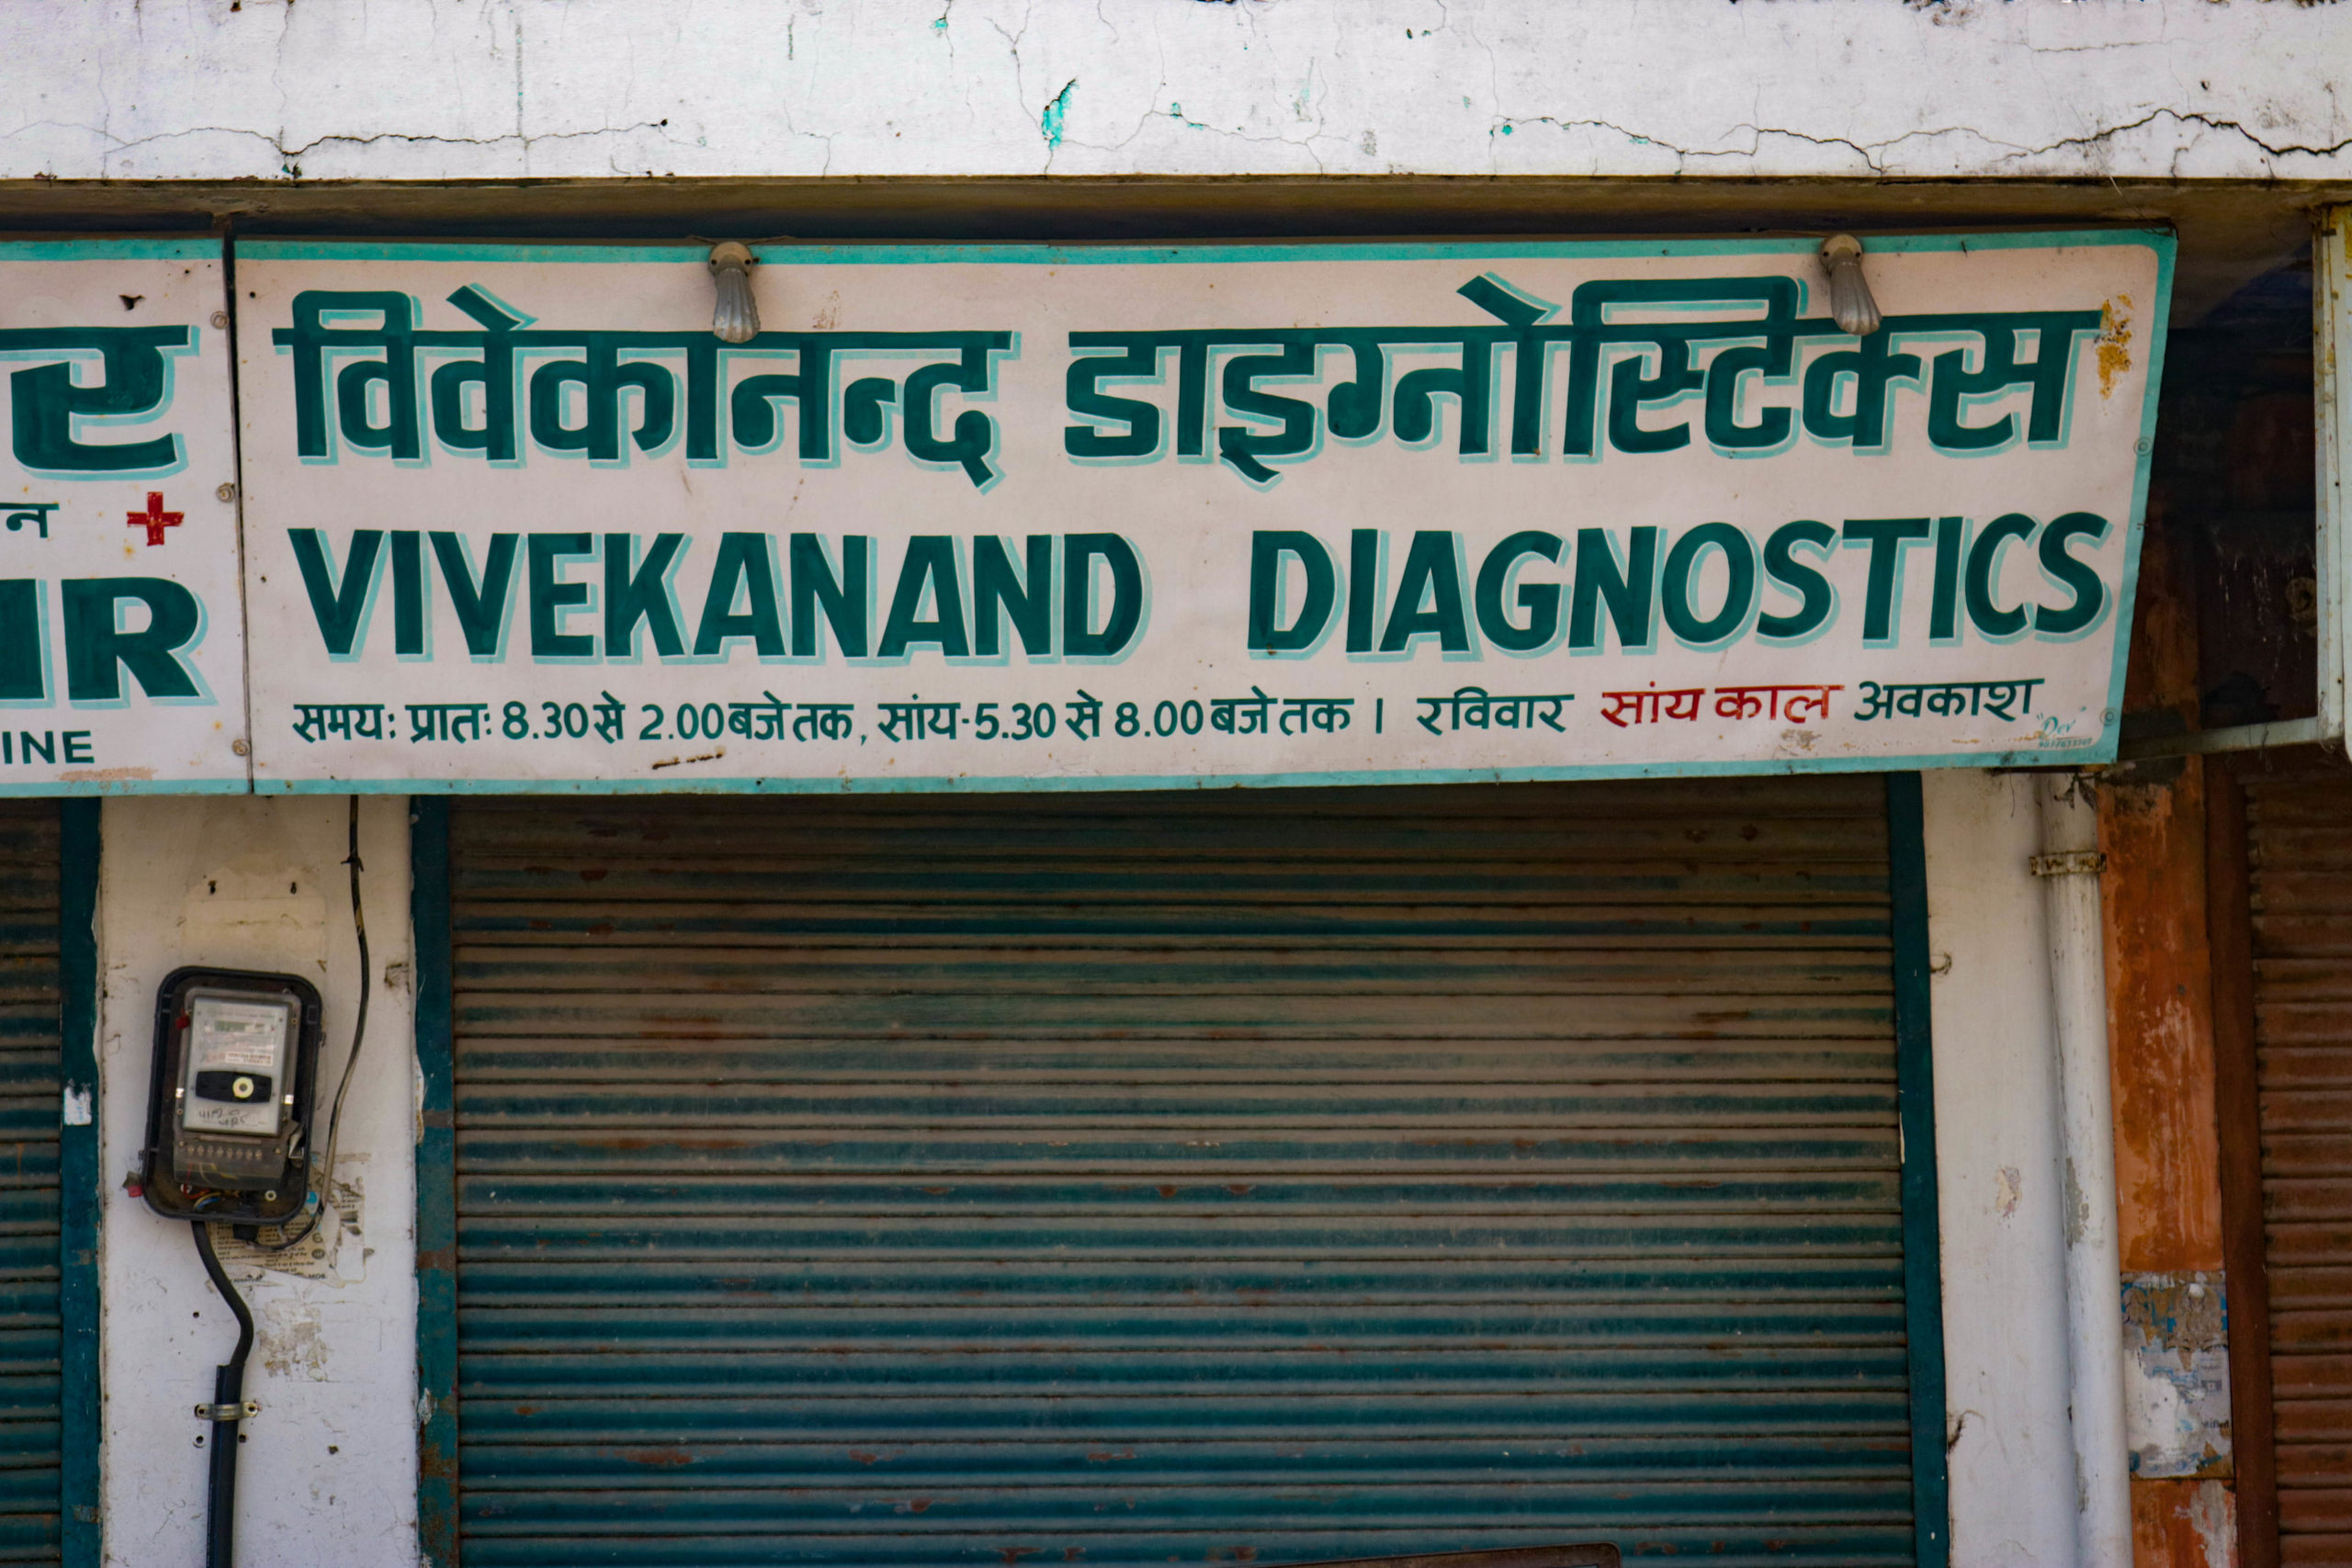 Vivekanand Diagnostics